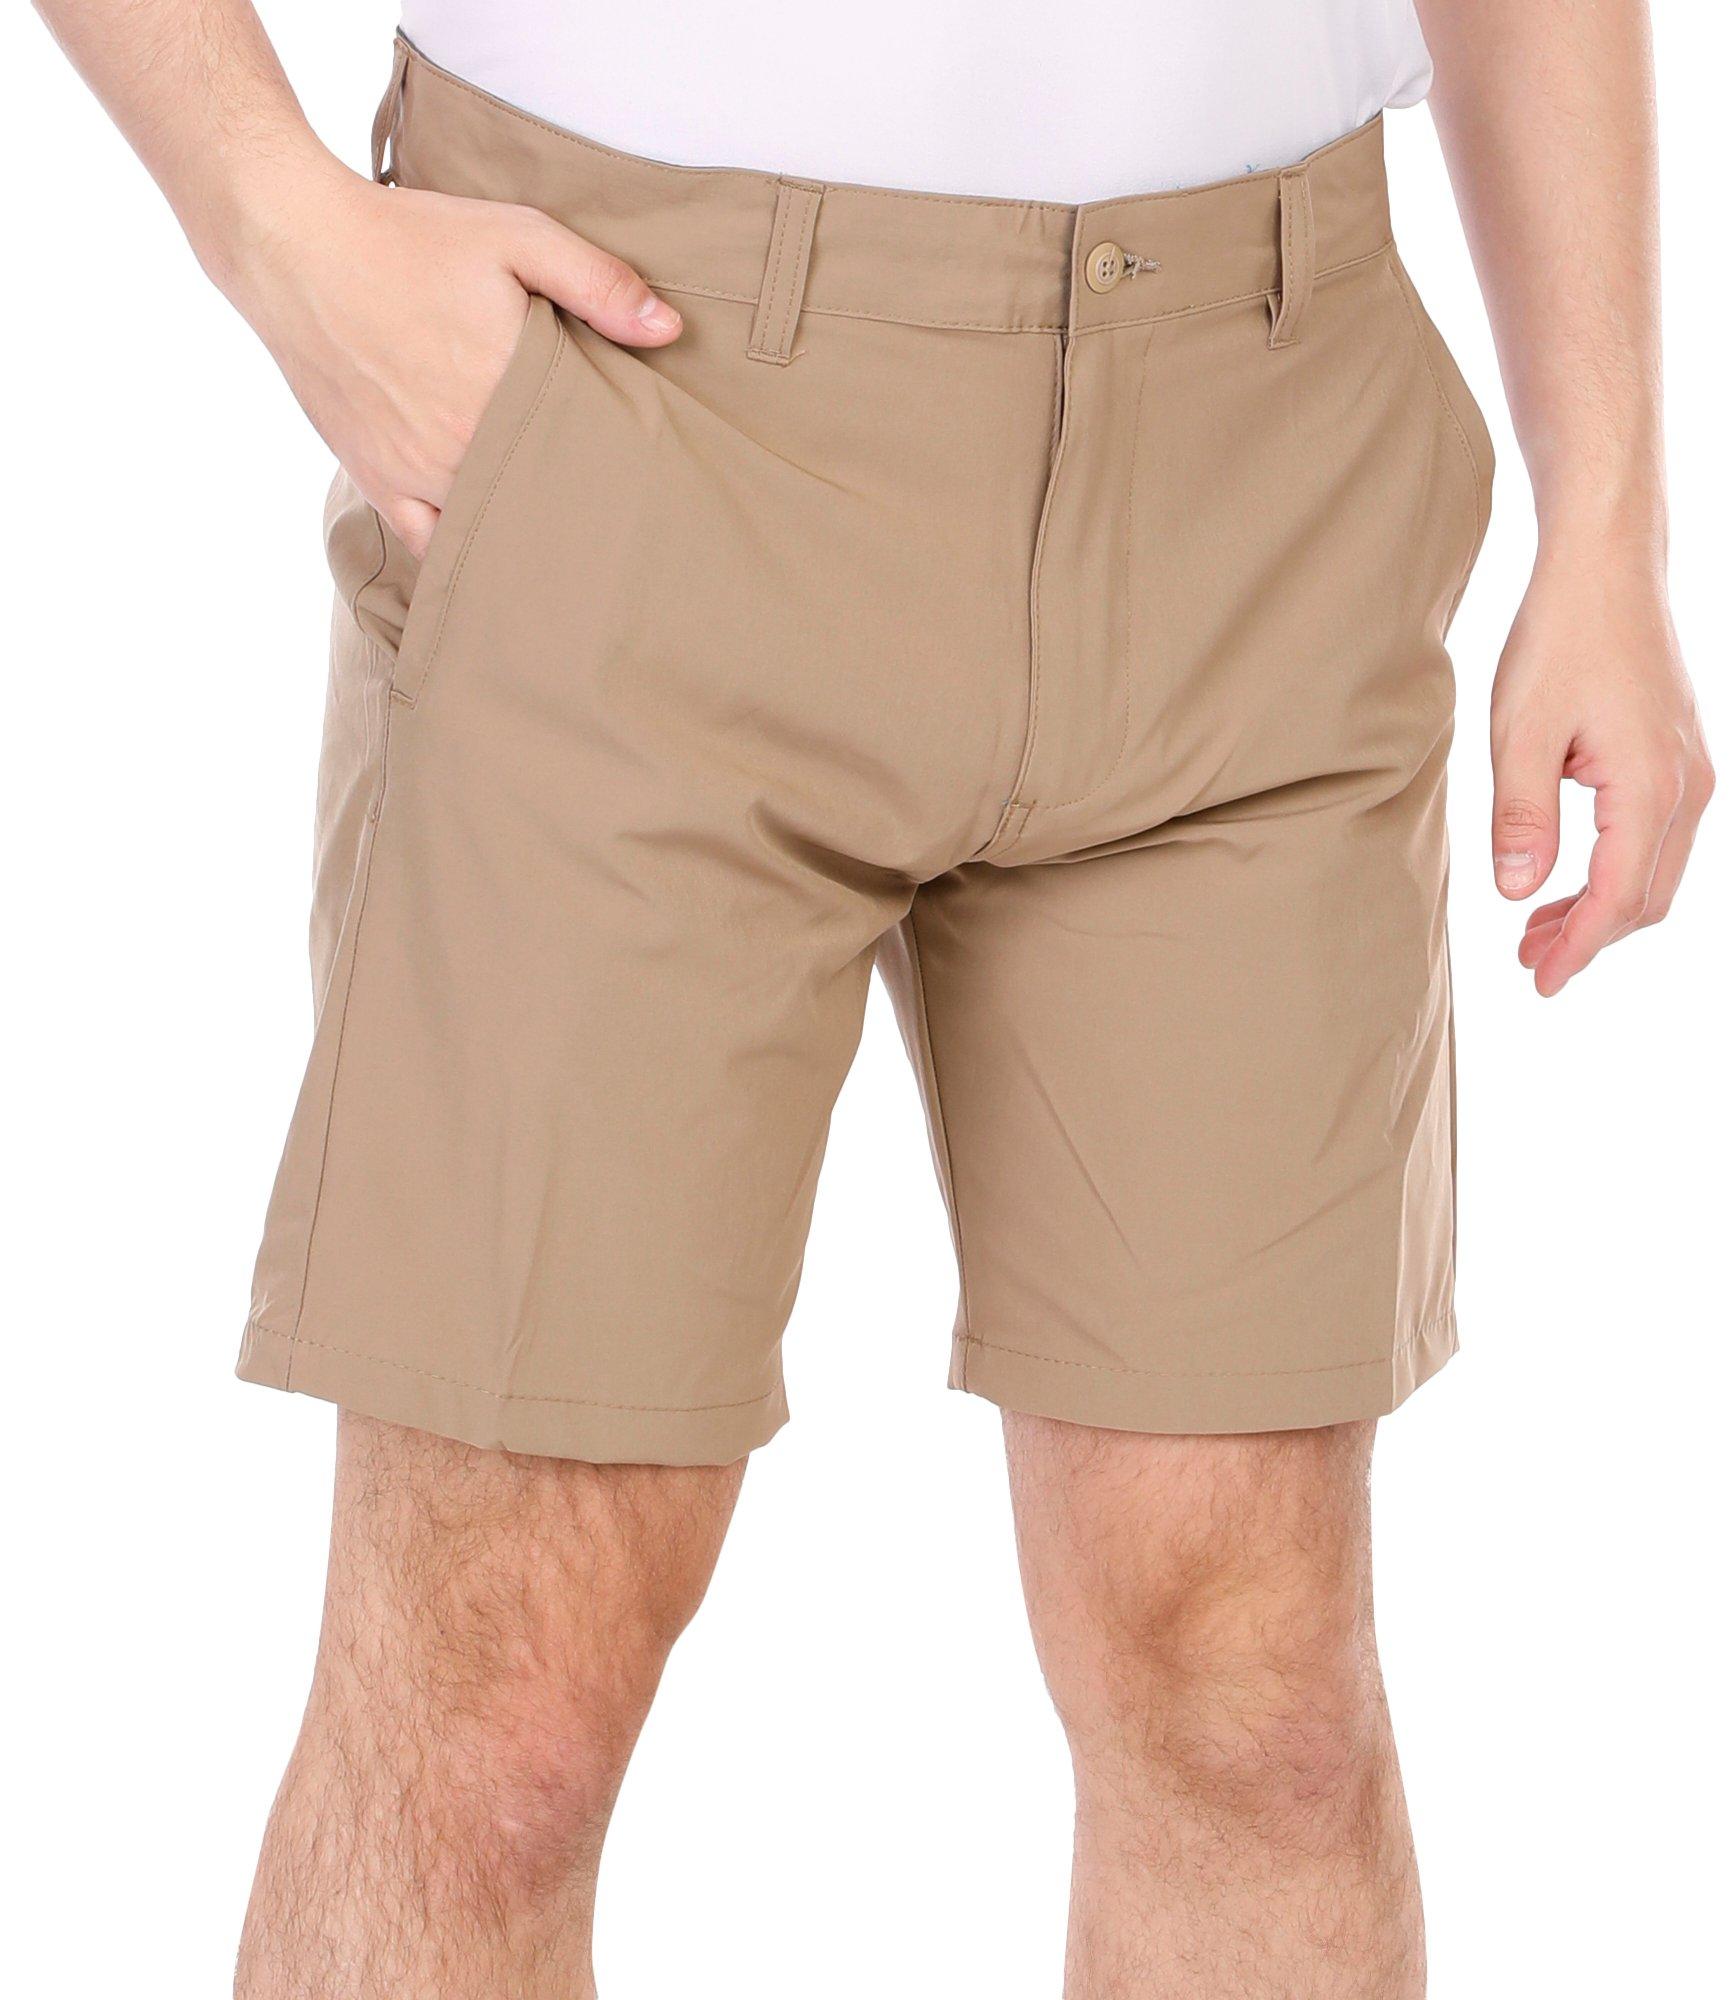 Men's Solid Golf Shorts